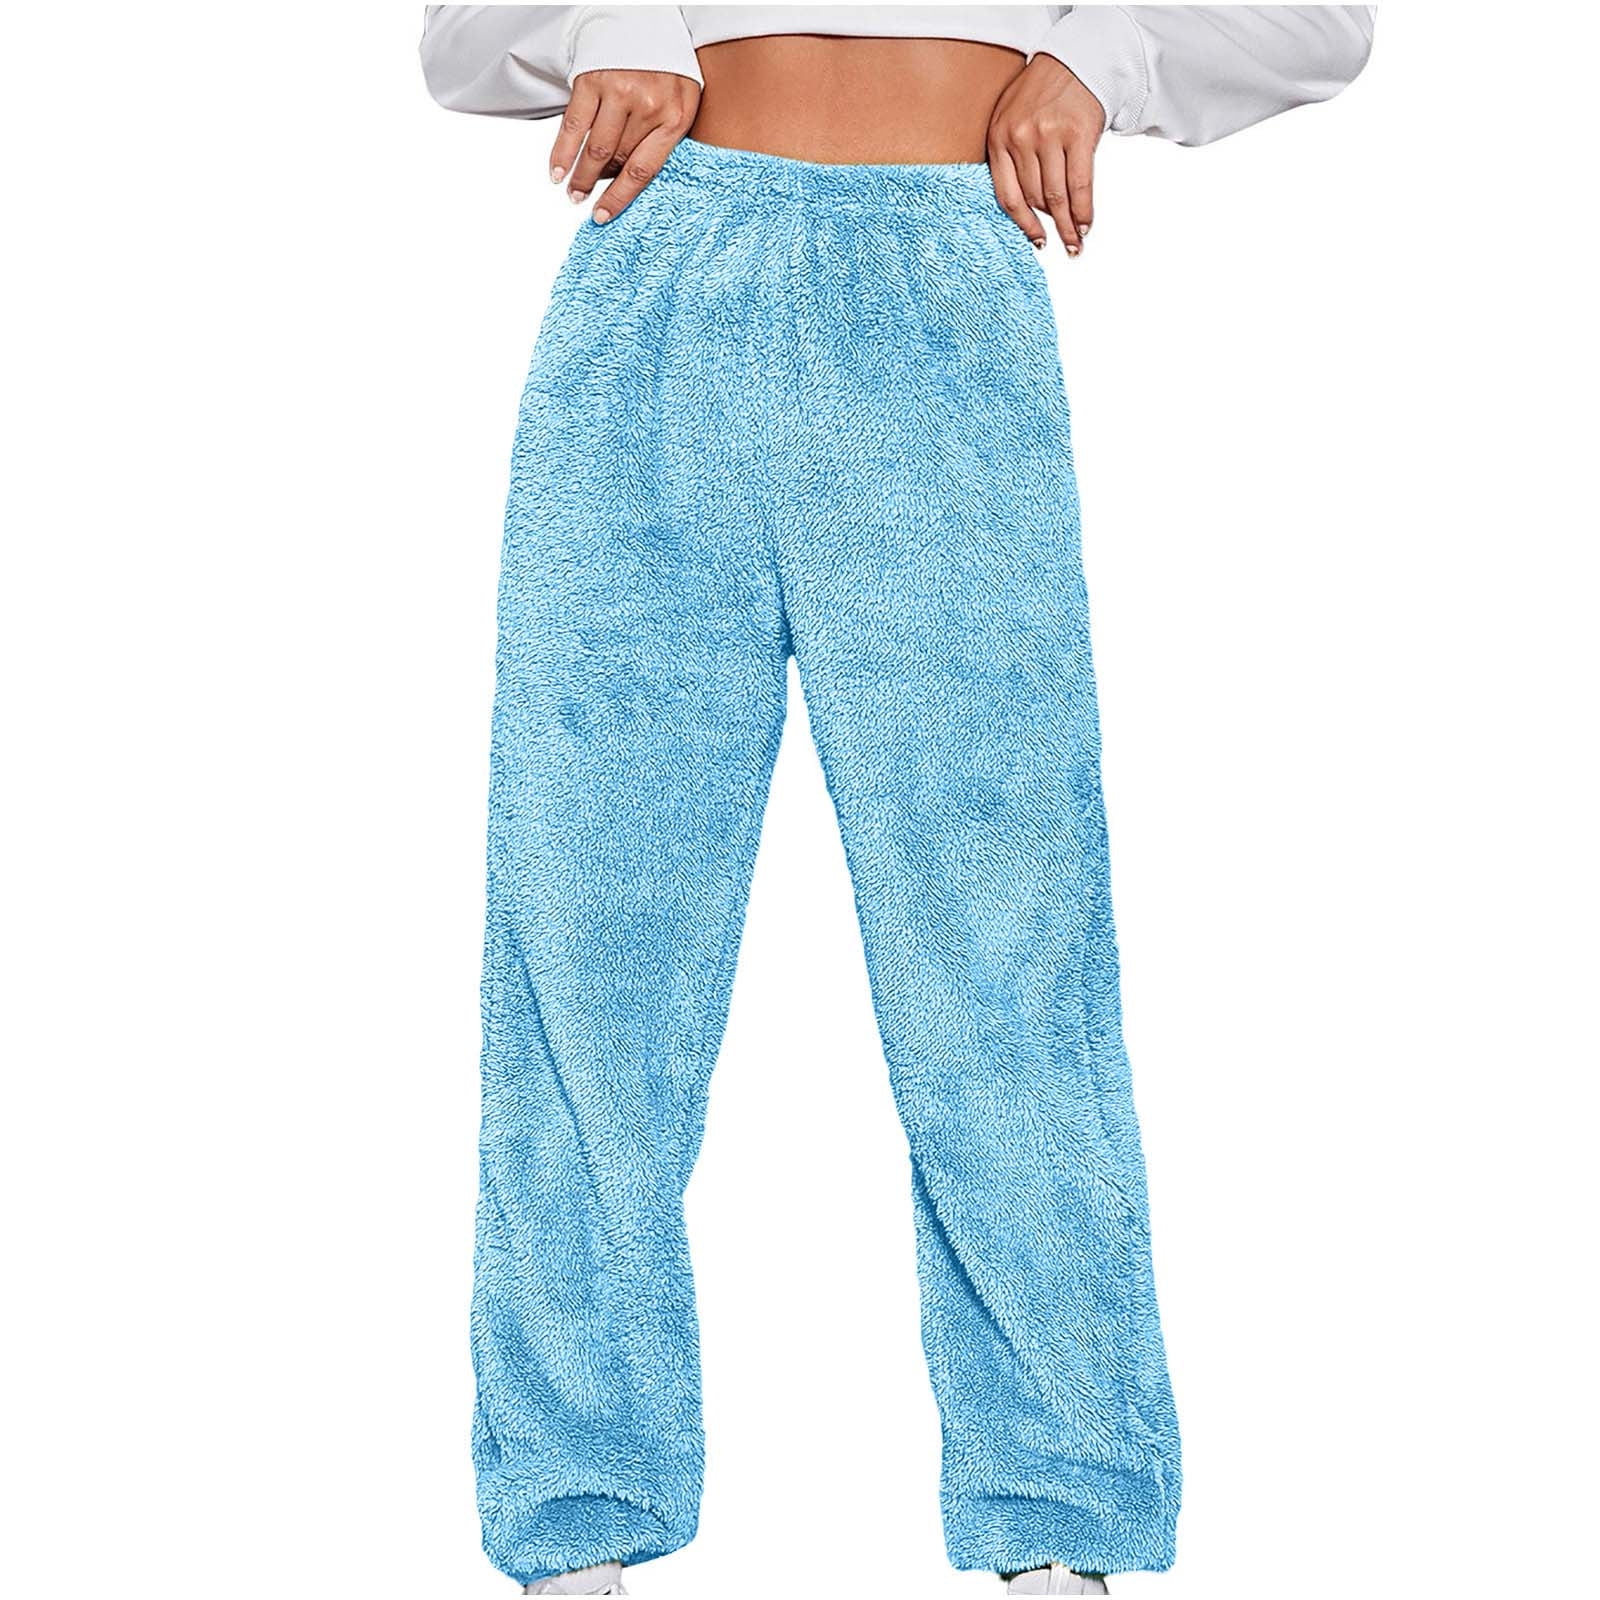 OGLCCG Women's Plush Fuzzy Pajama Pants Plus Size Winter Warm Cozy Fluffy  Pj Bottoms Casual Loose Elastic Waist Lounge Pants Sleepwear 